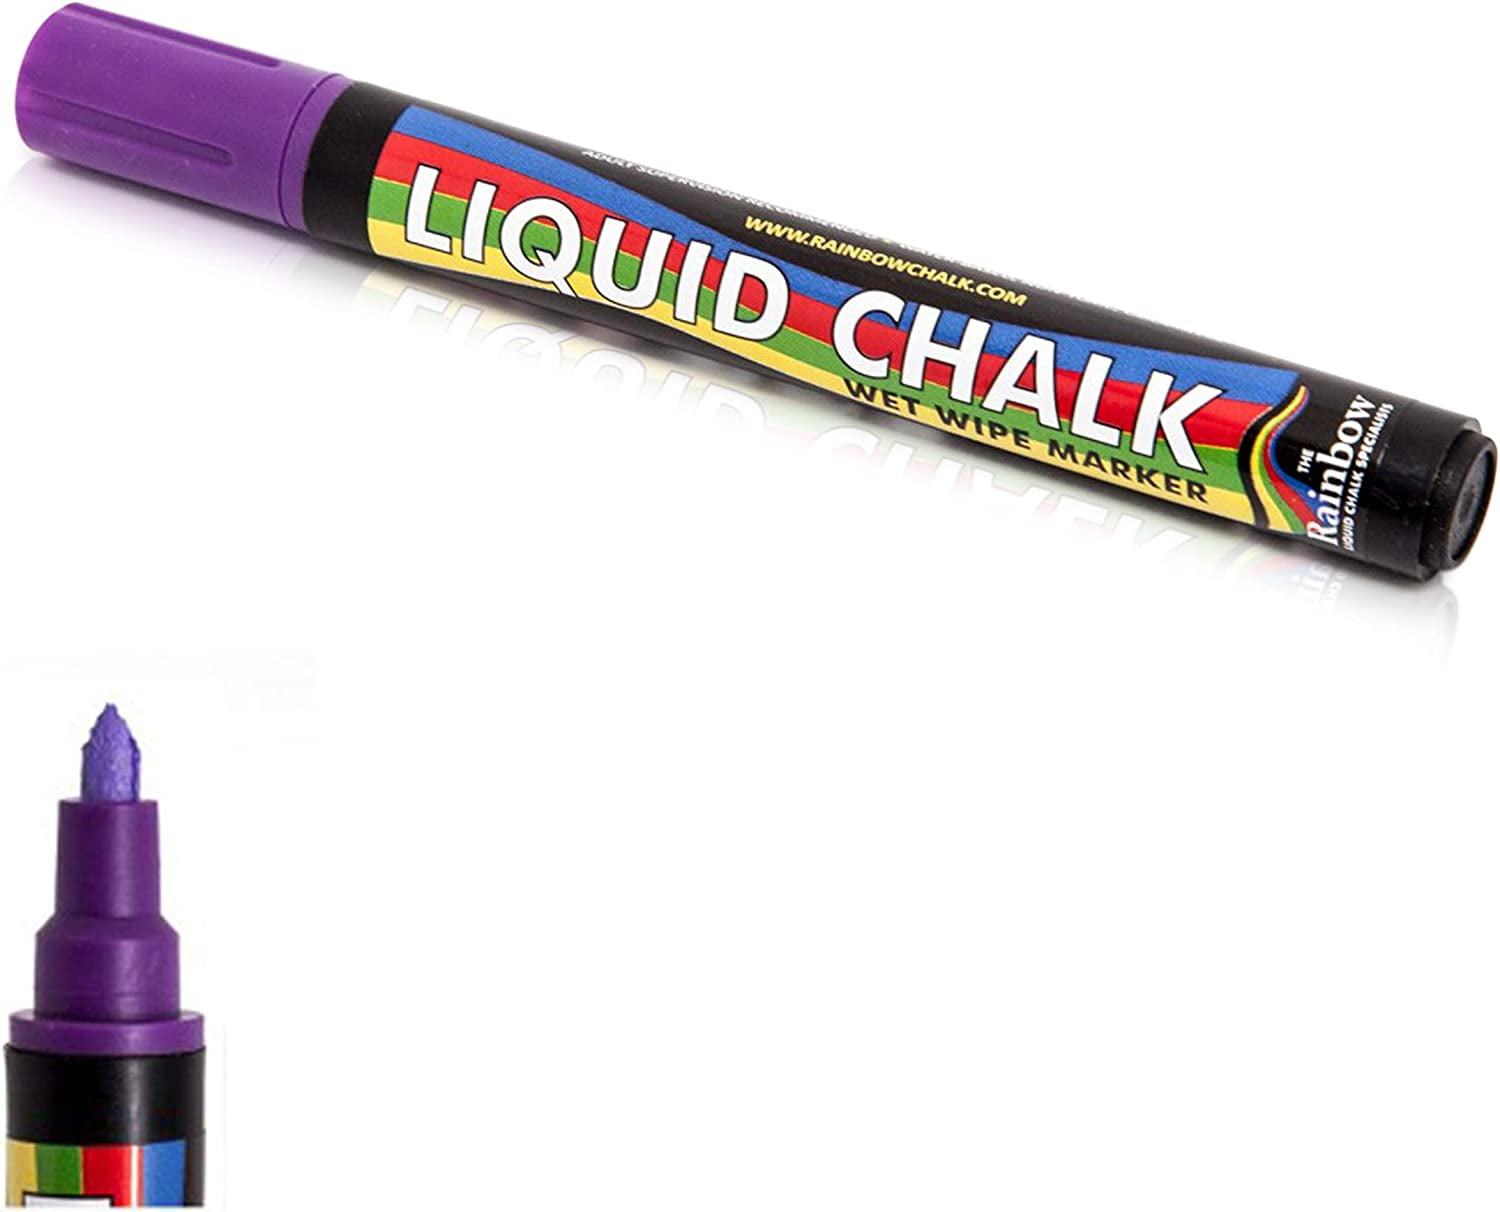 Mr. Pen- Chalk Markers, 6 Pack